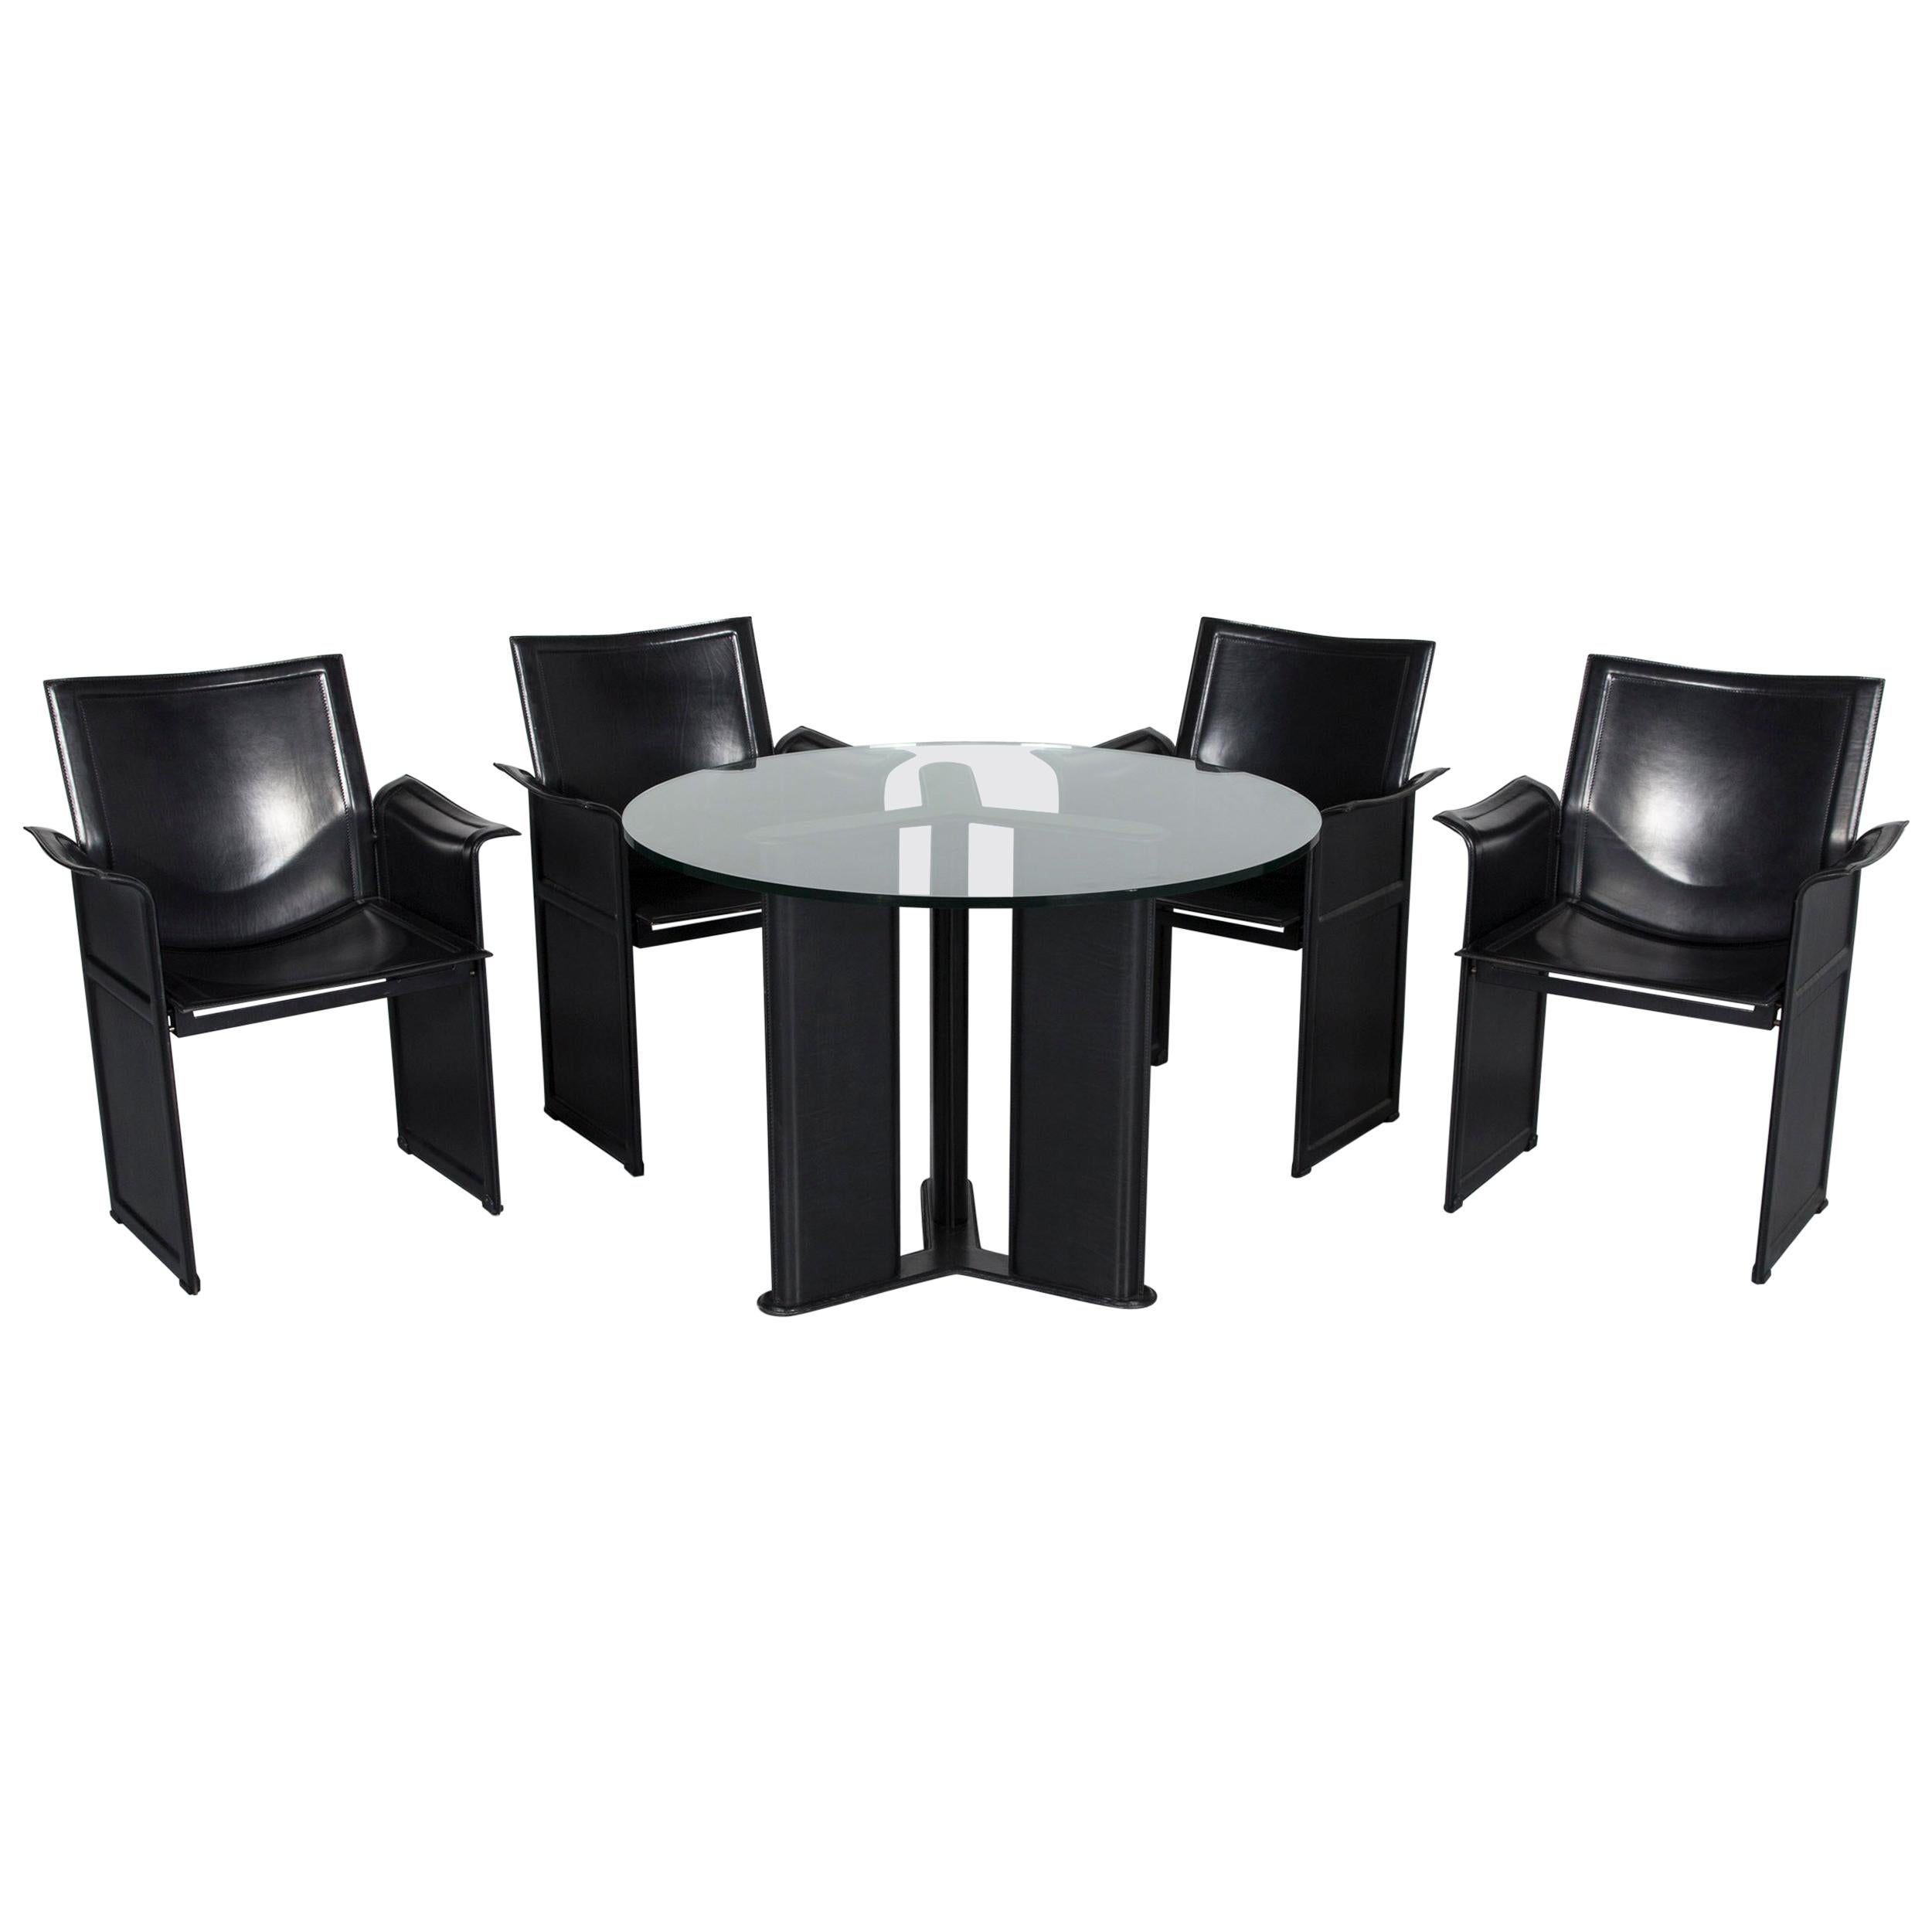 Matteo Grassi Korium Designer Leather Glass Table Armchair Set Coffeetable Black